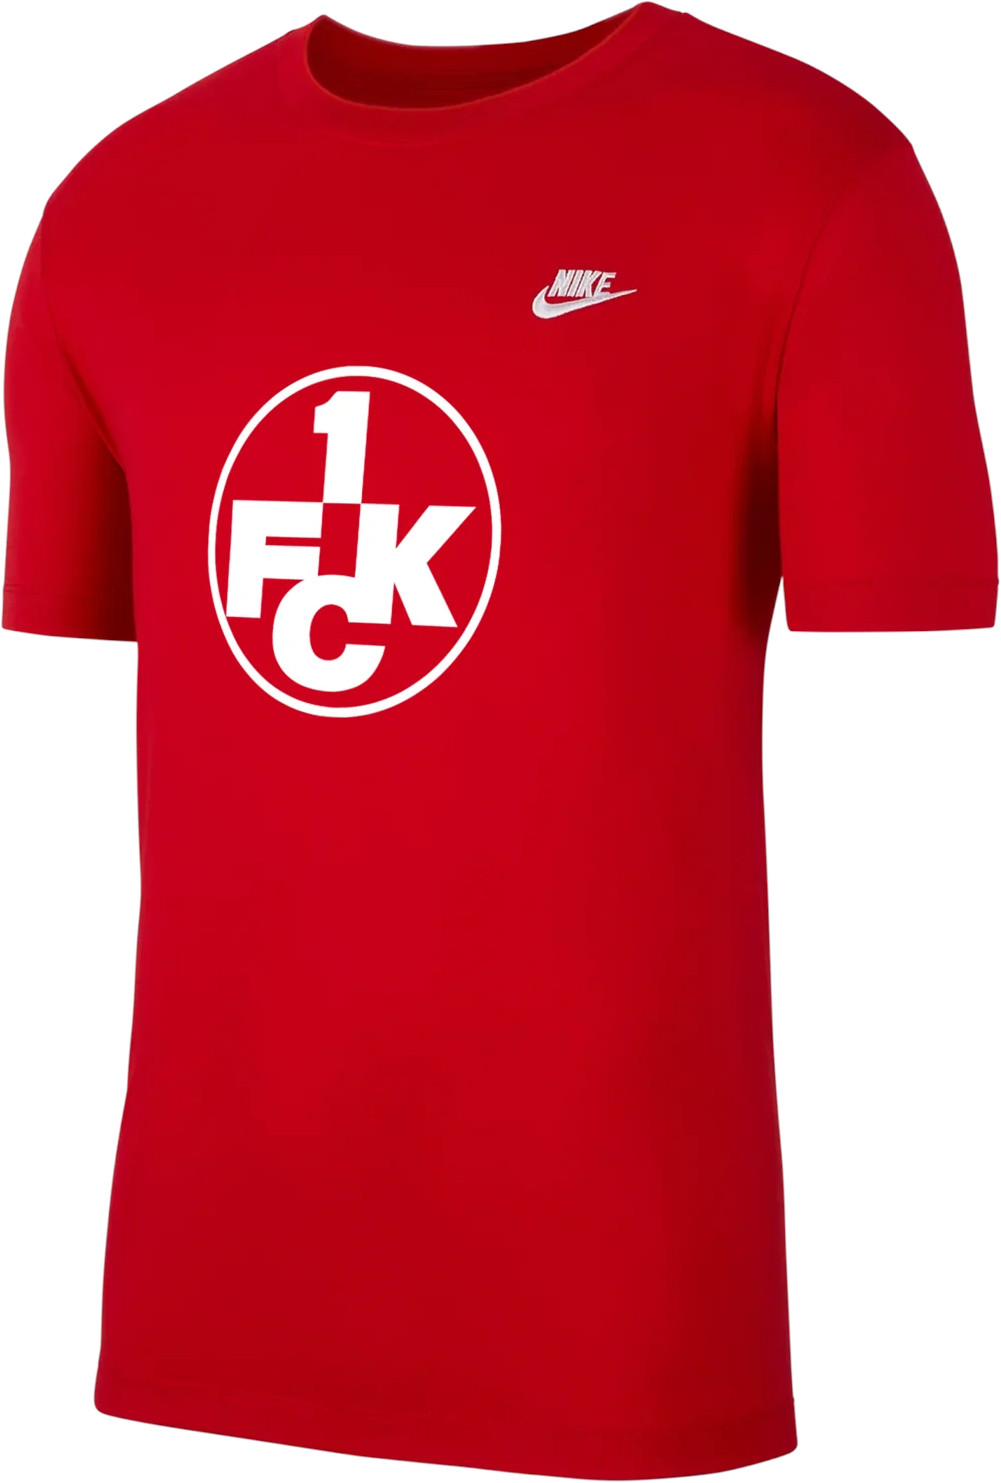 Nike 1.FC Kaiserslautern Club Tee Rövid ujjú póló